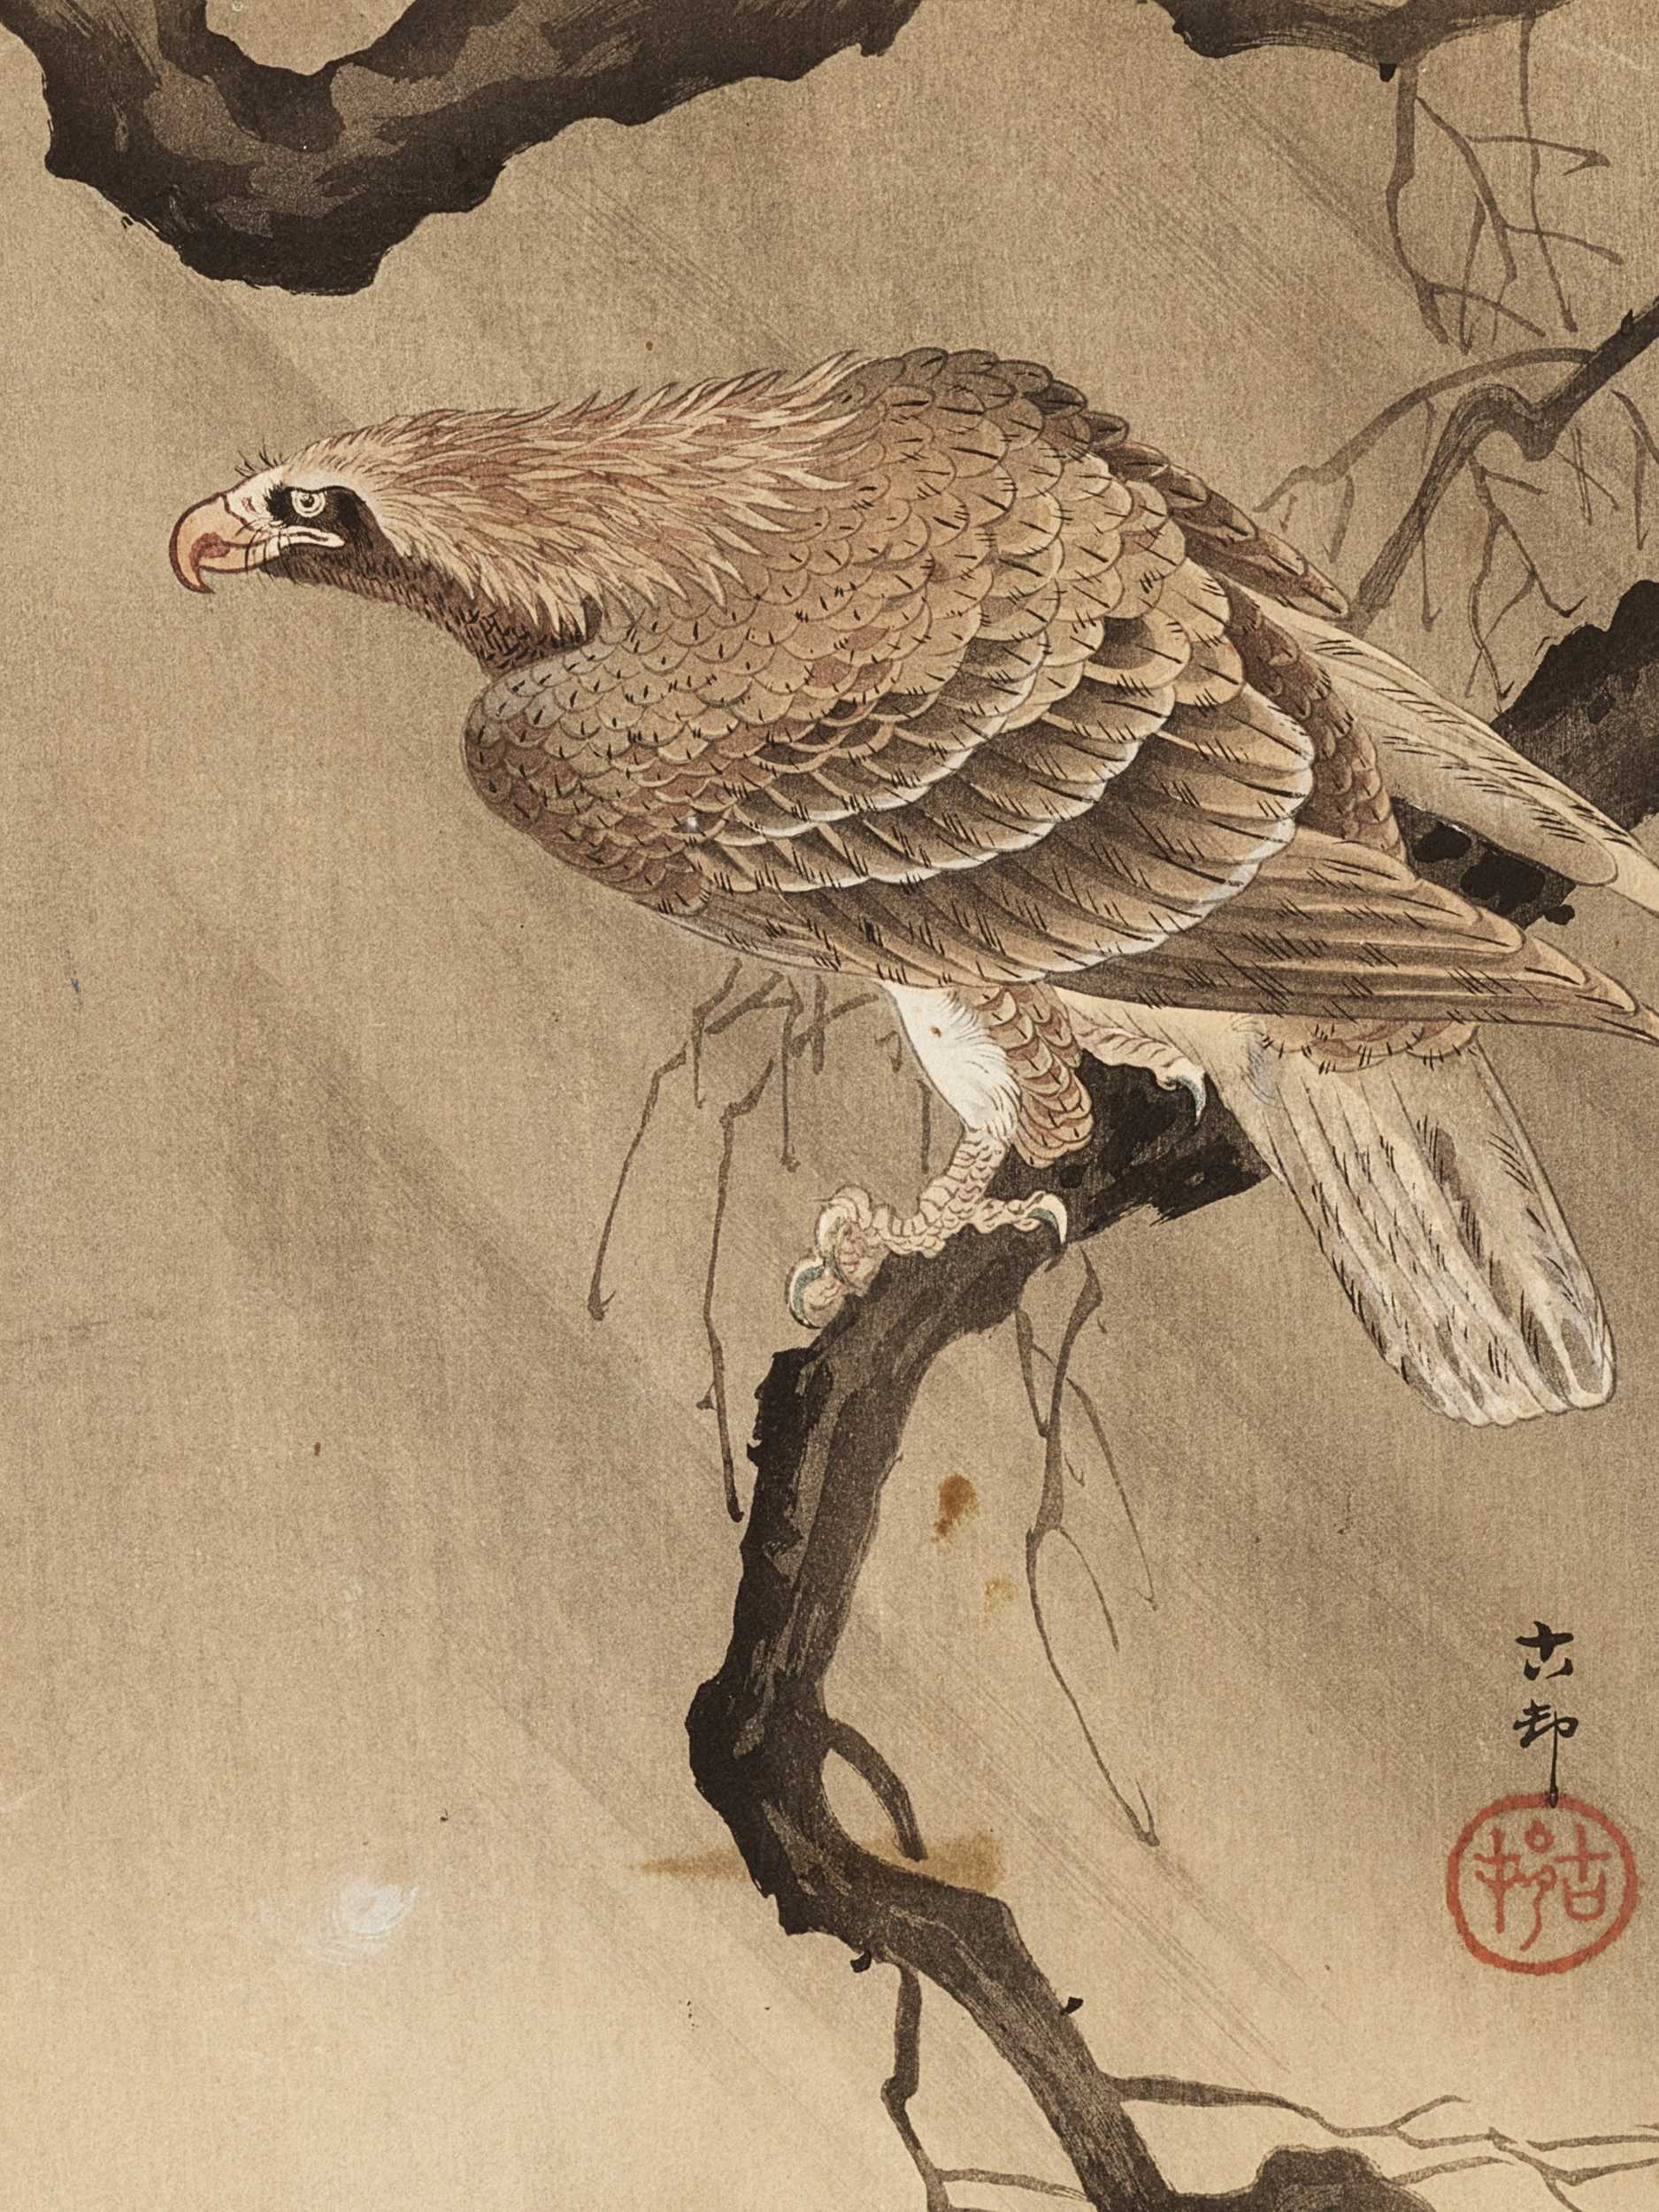 Lot 283 - OHARA KOSON: A COLOR WOODBLOCK PRINT OF AN EAGLE